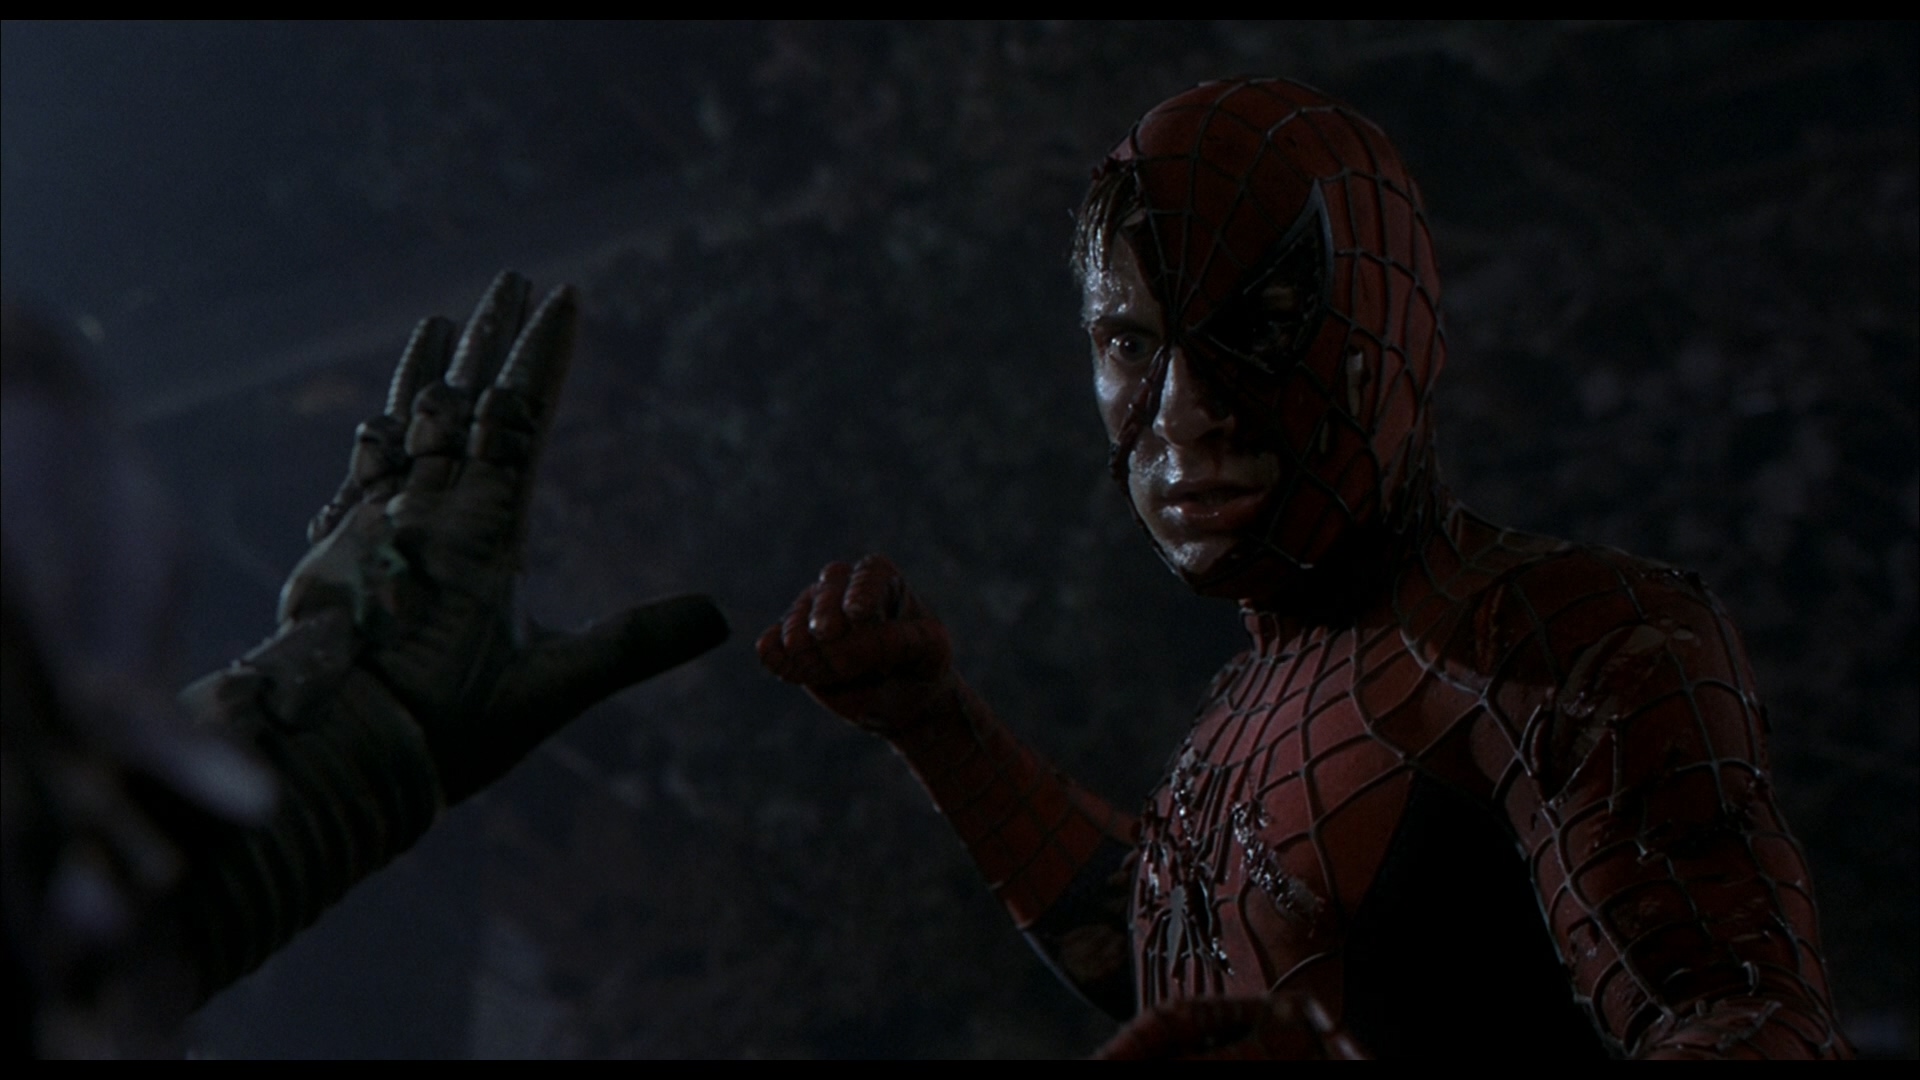 [蜘蛛侠1].Spider-Man.I.2002.CHN.BluRay.1080p.AVC.DTS-HD.MA.5.1-HDBiger   42.31G( ]+ g* K. k$ h6 ?-10.jpg